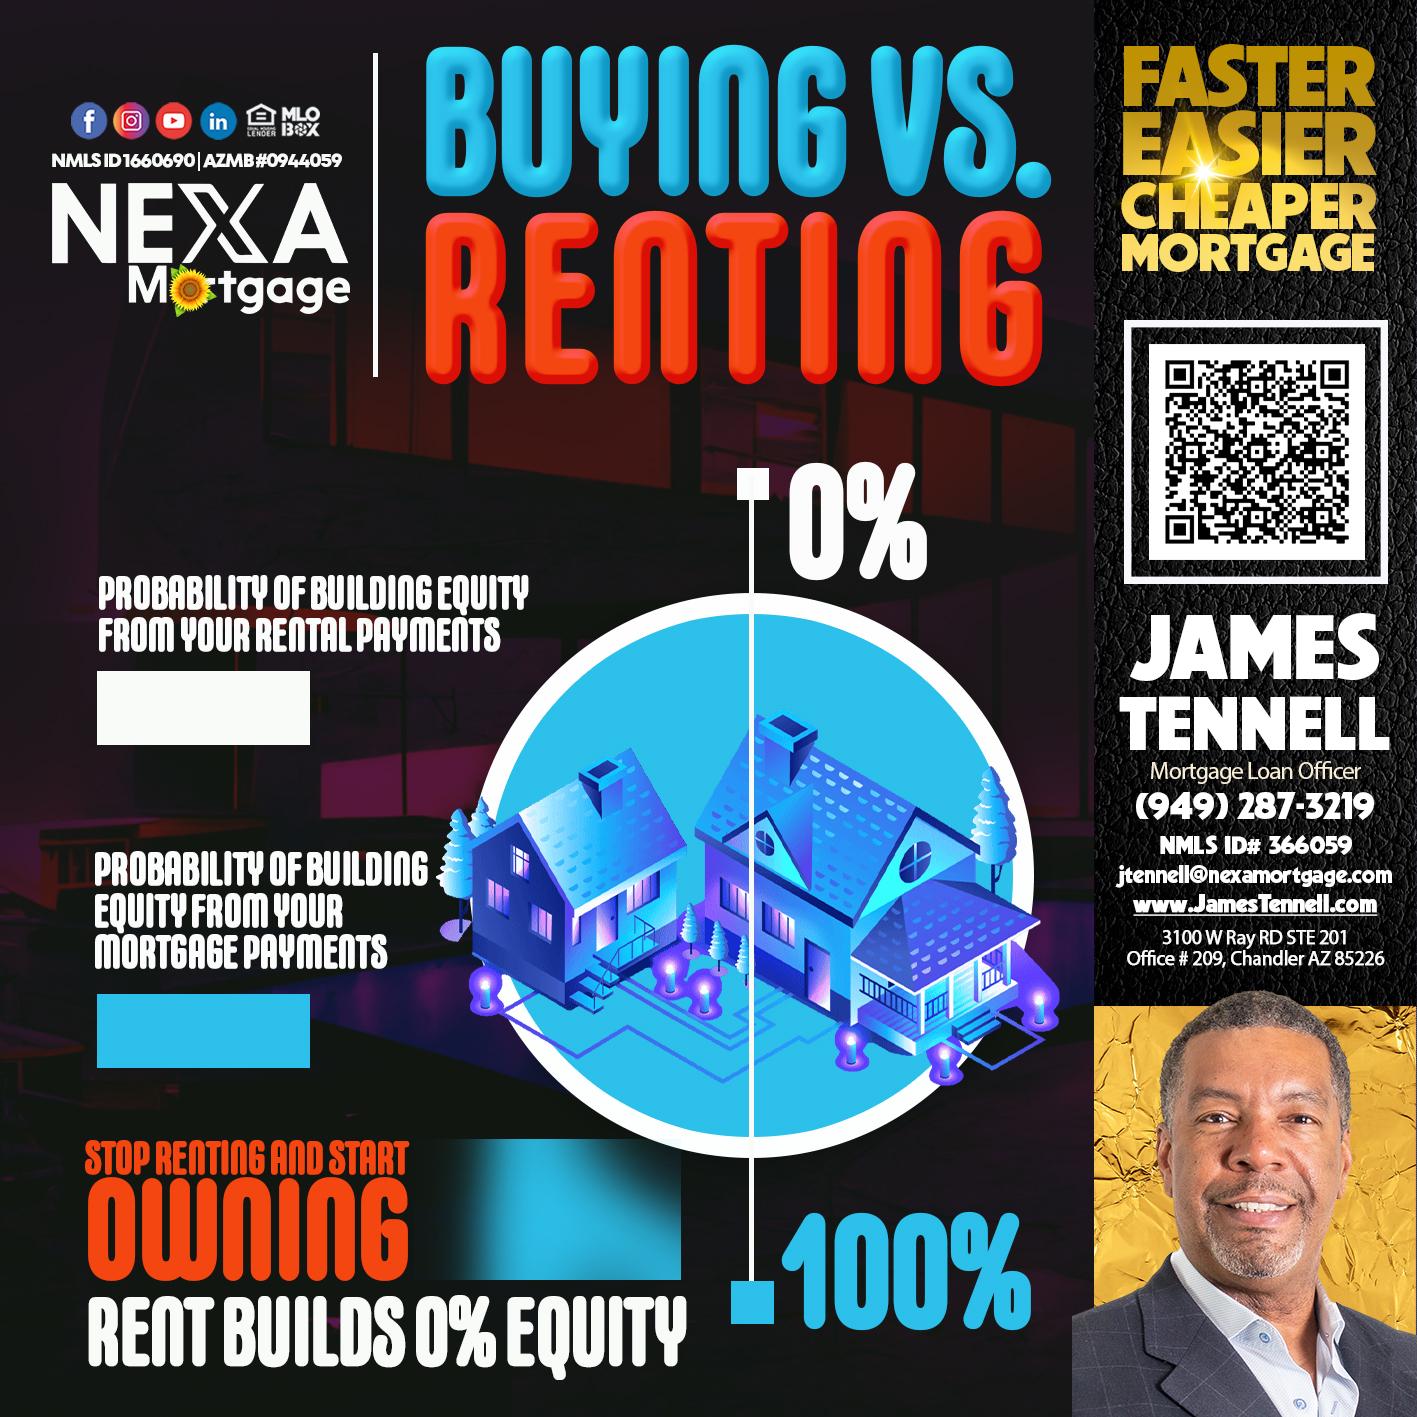 BUYING VS RENTING - James Tennell -Mortgage Loan Originator